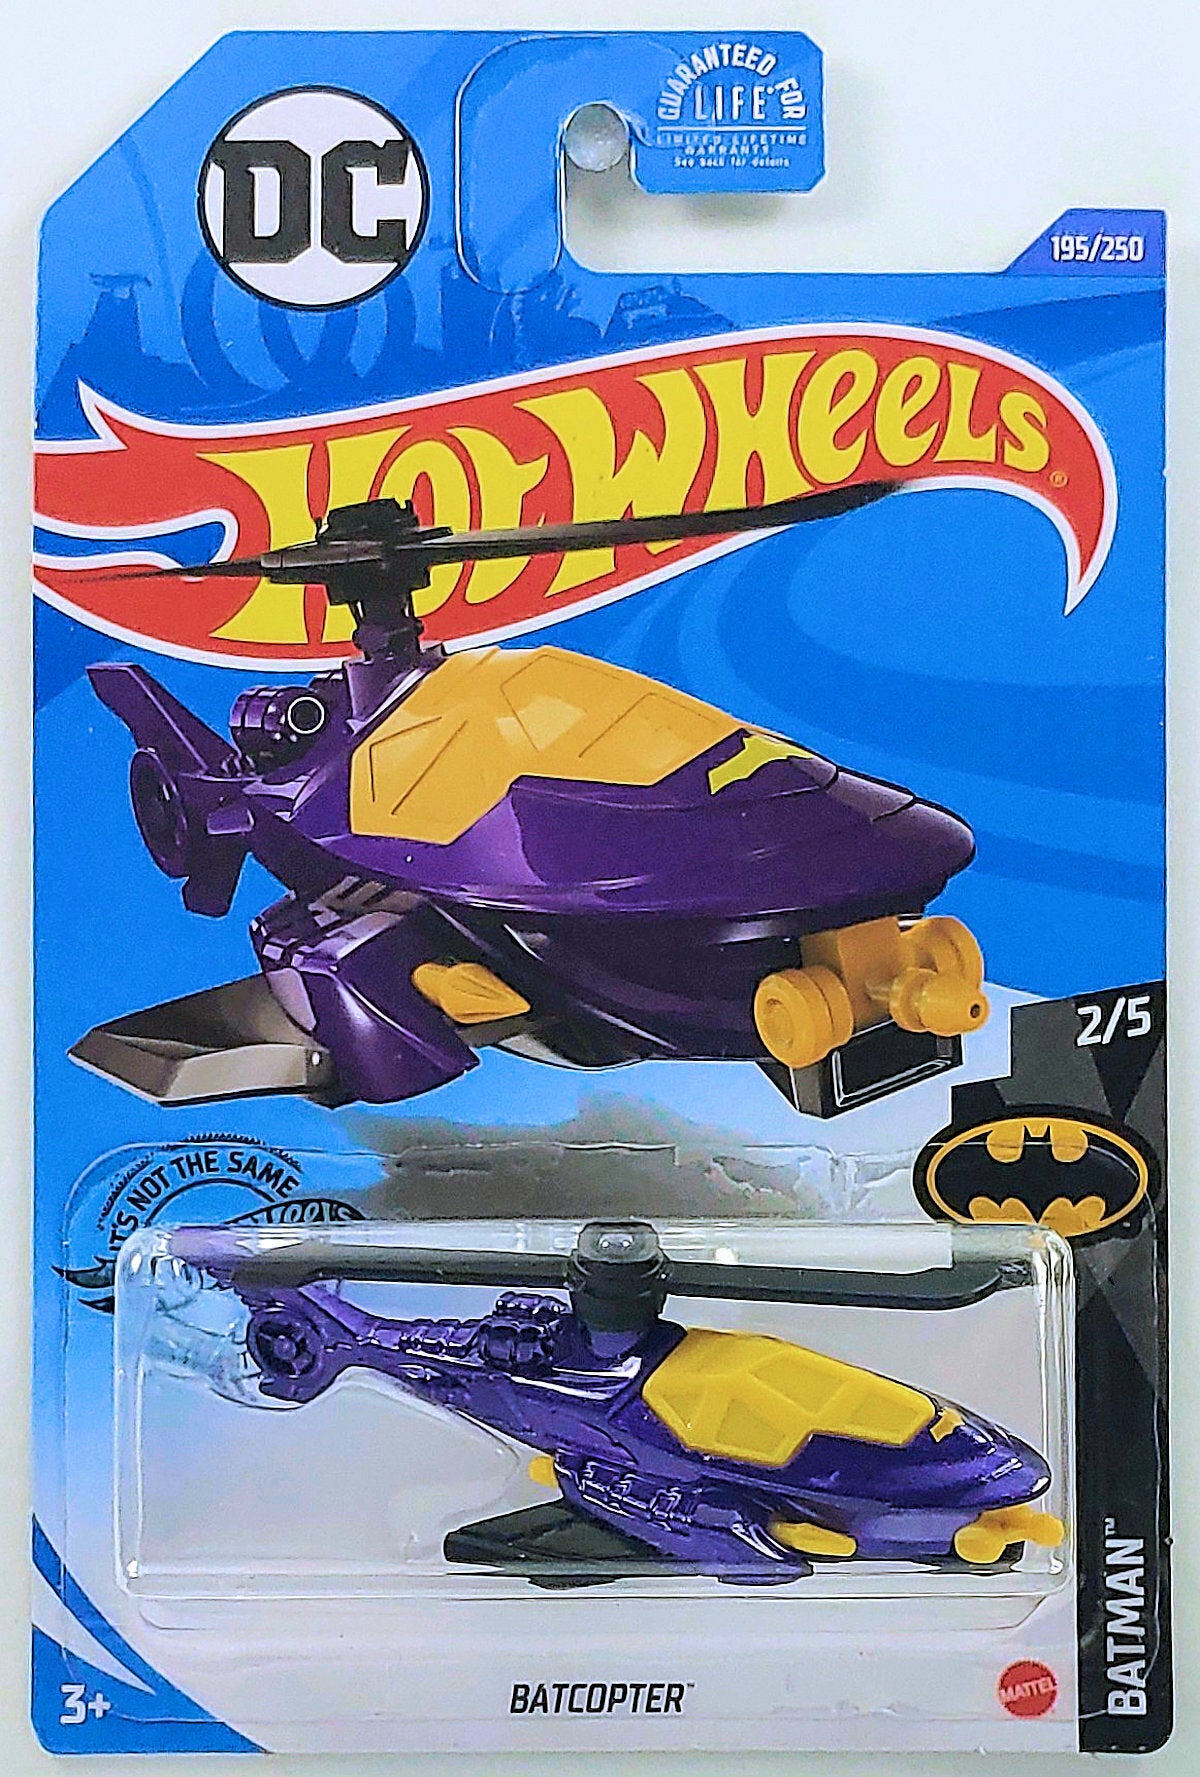 Hot Wheels 2020 - Collector # 195/250 - Batman 2/5 - Batcopter - Purple - USAdcc